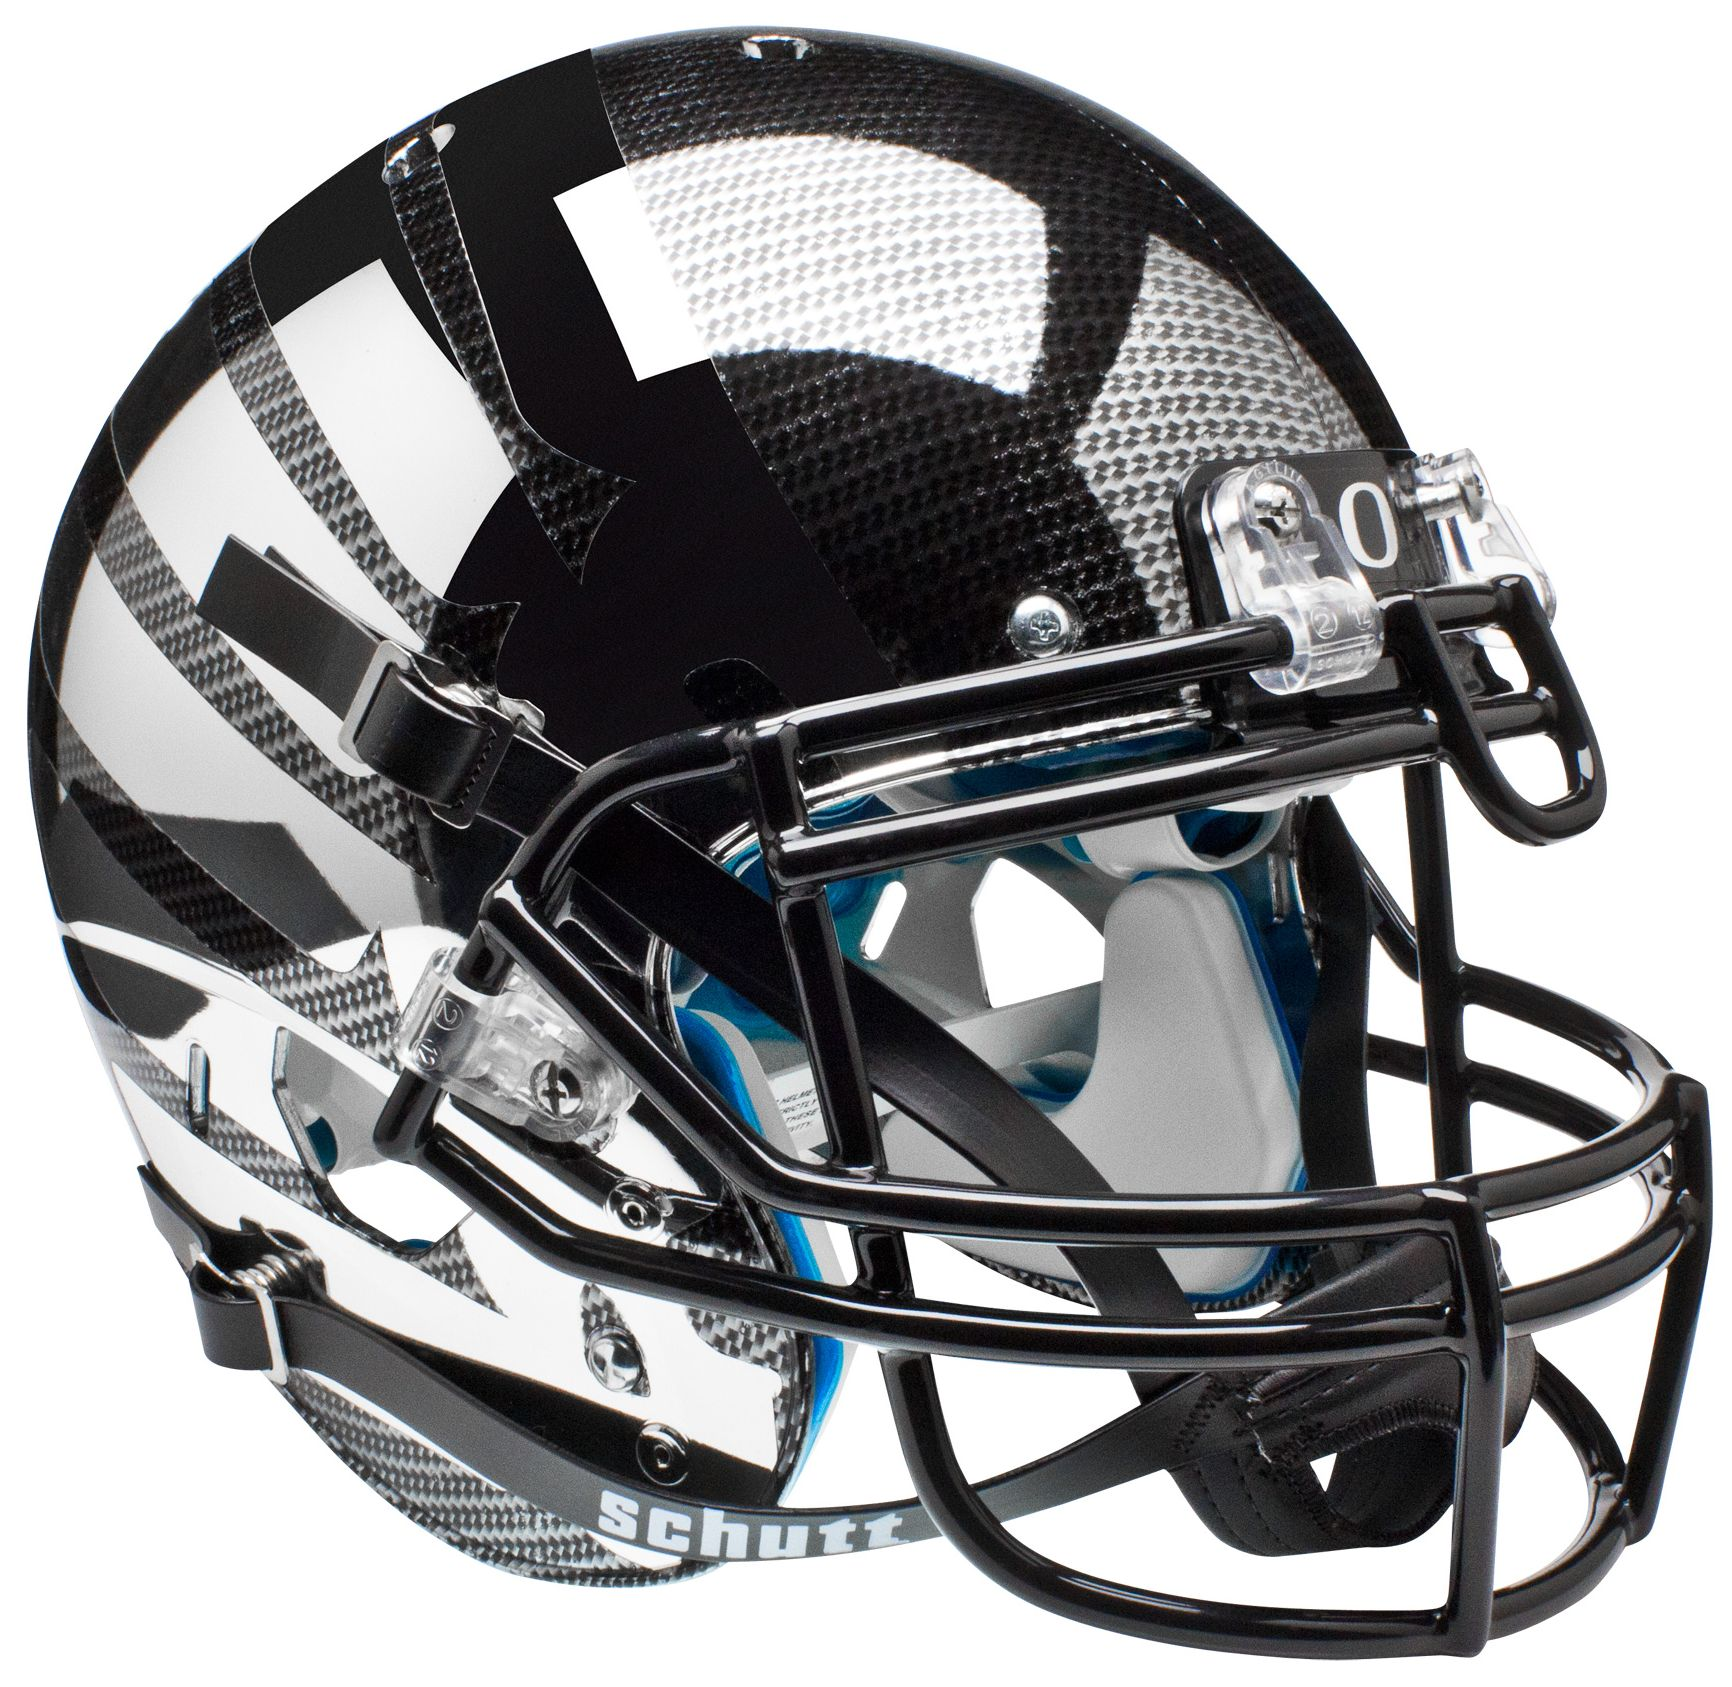 Oregon Ducks Authentic College XP Football Helmet Schutt <B>Smoke AquaTech Wing</B>